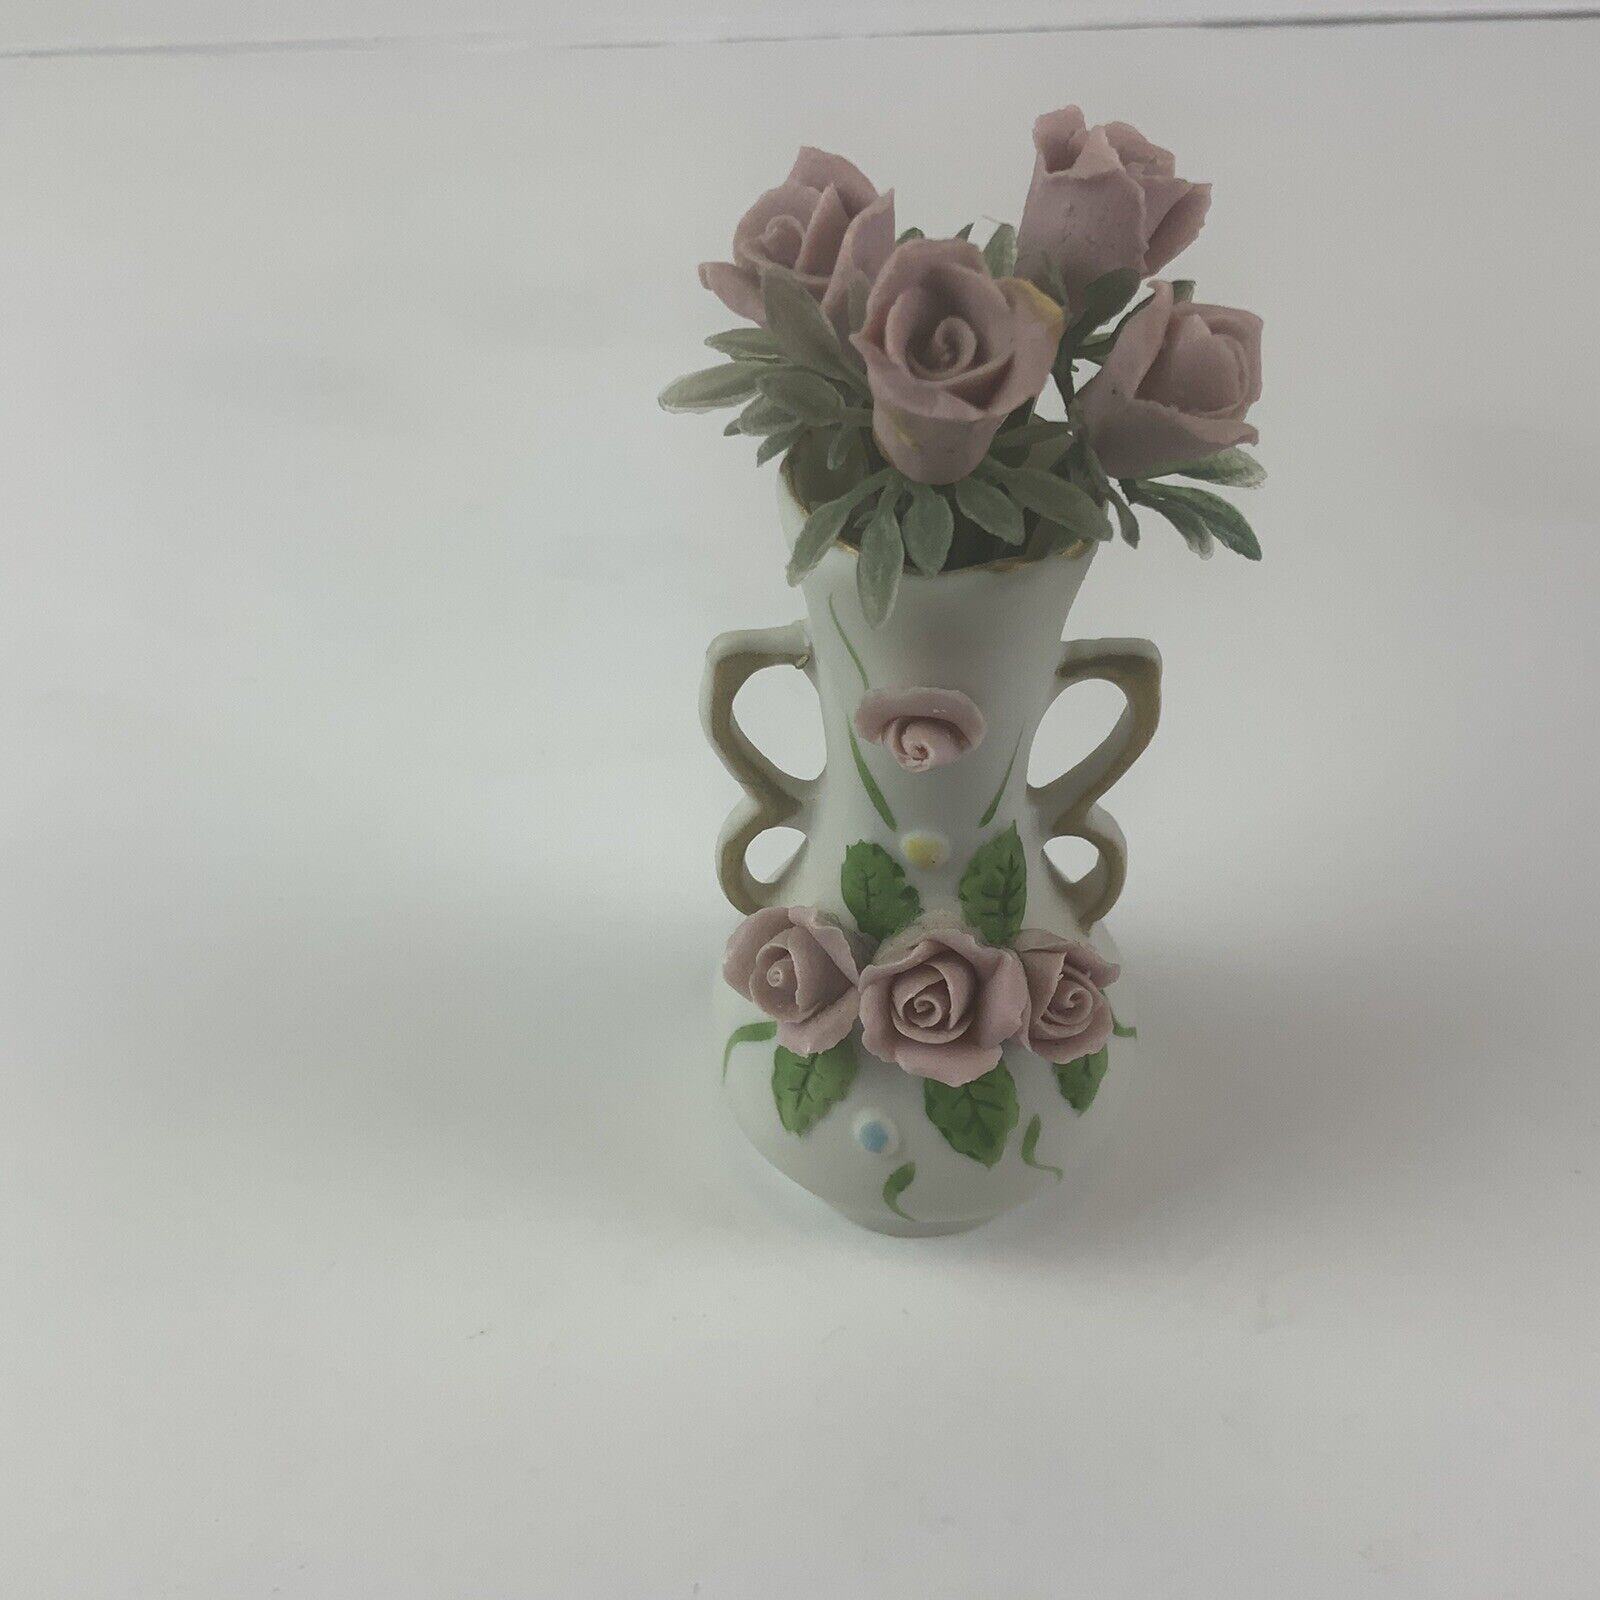 Price Imports - Miniature Vase - Hand Painted Ceramic W/Matching Ceramic Flowers